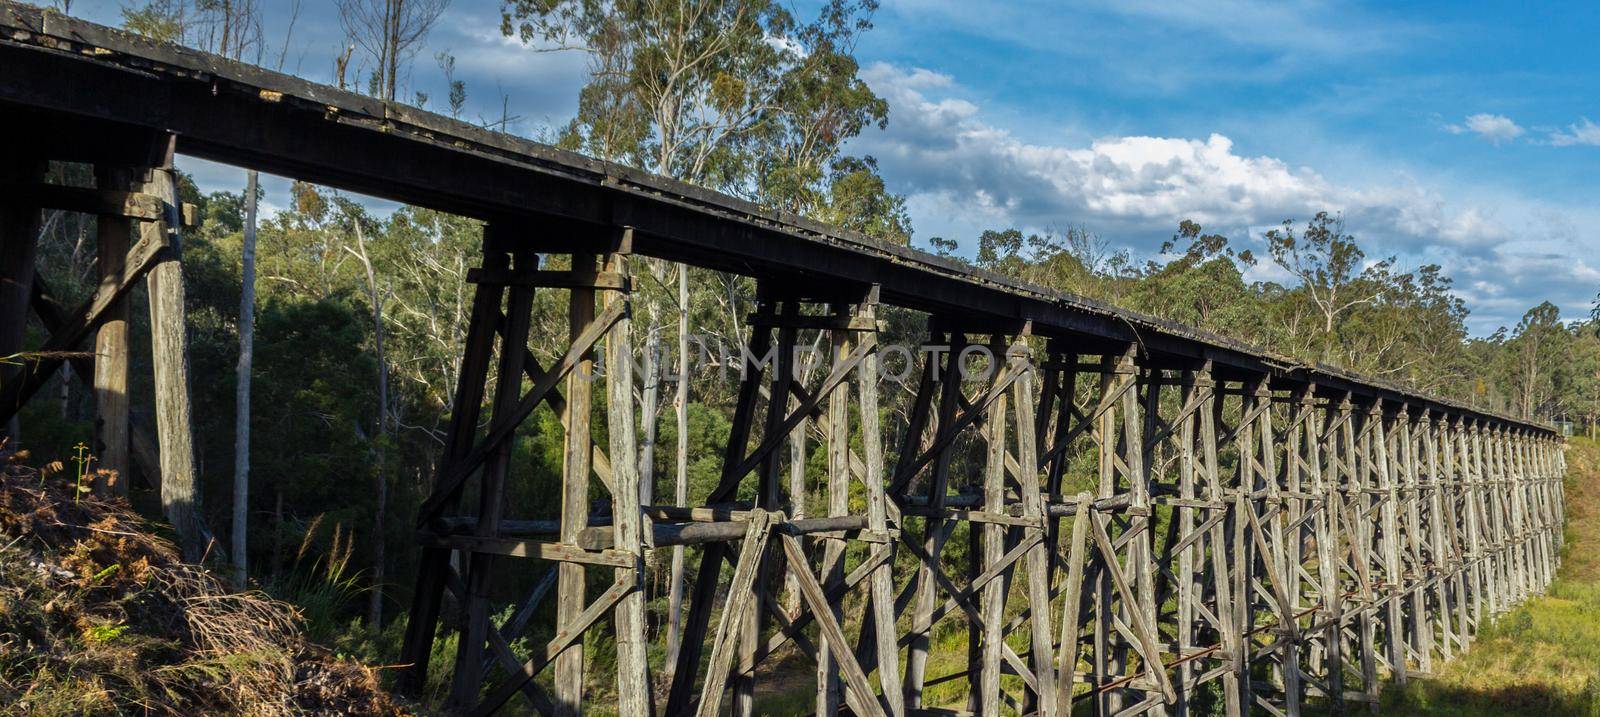 view over the Noojee Trestle bridge, Gippsland, Victoria, Australia by bettercallcurry